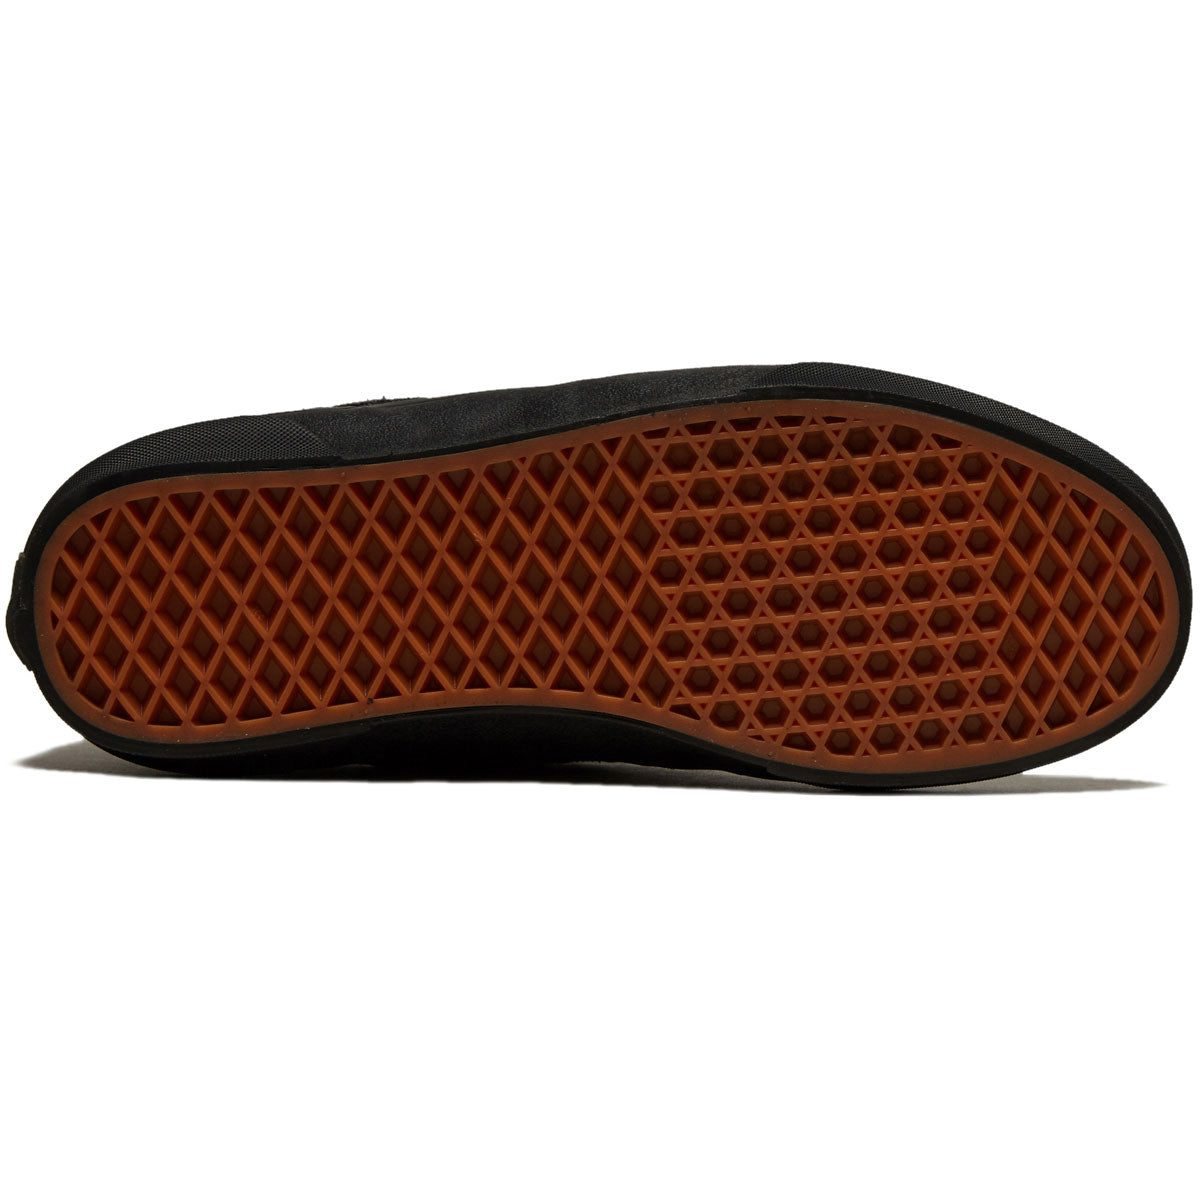 Vans Skate Rowley Shoes - Suede Charcoal/Black image 4